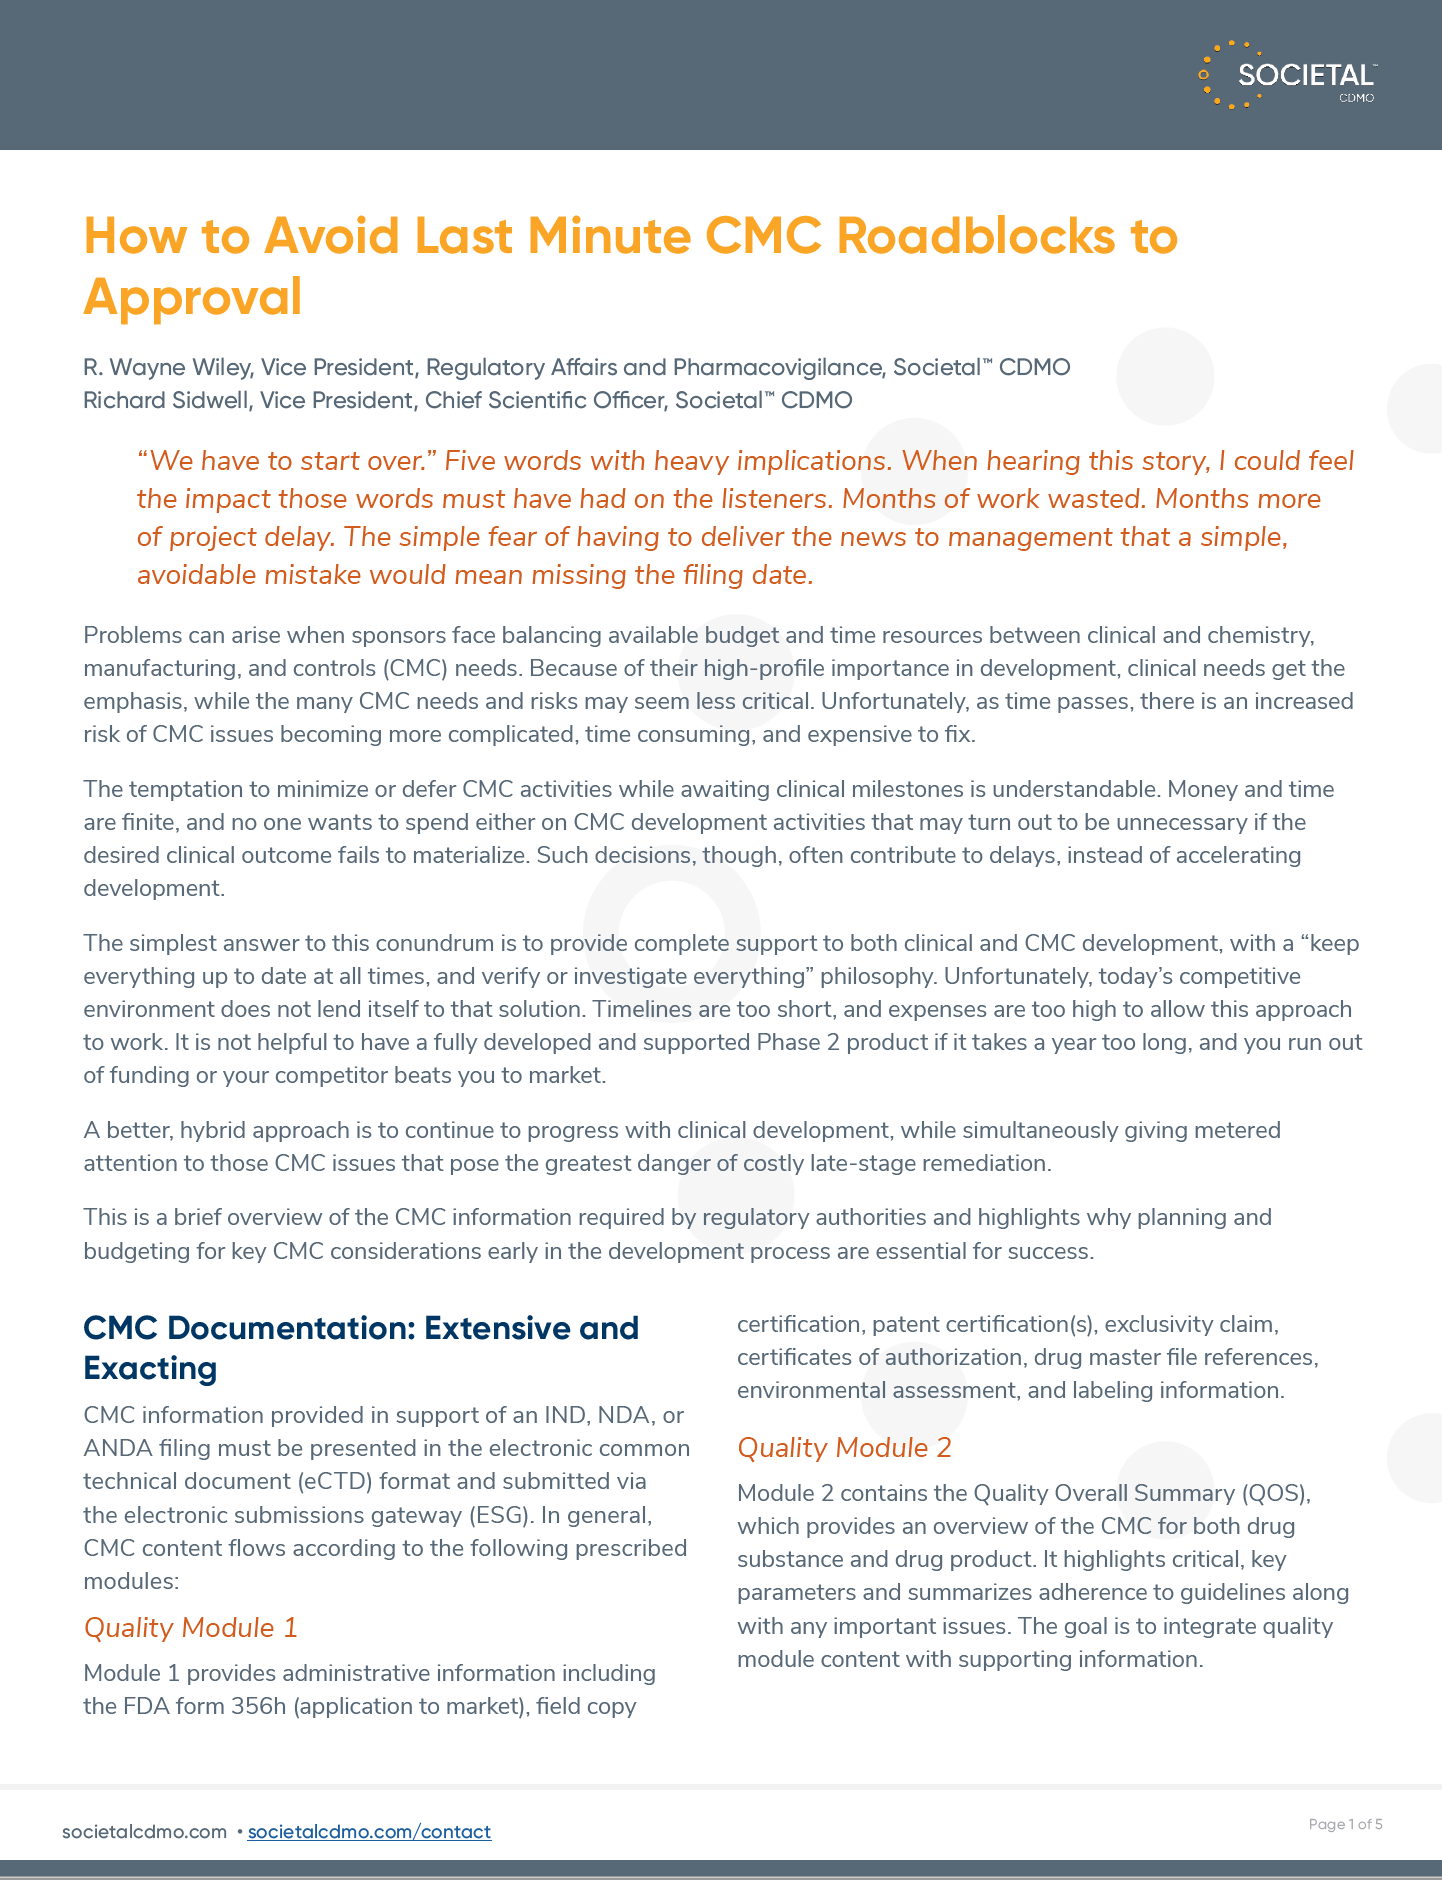 How to avoid last minute CMC Roadblocks White Paper